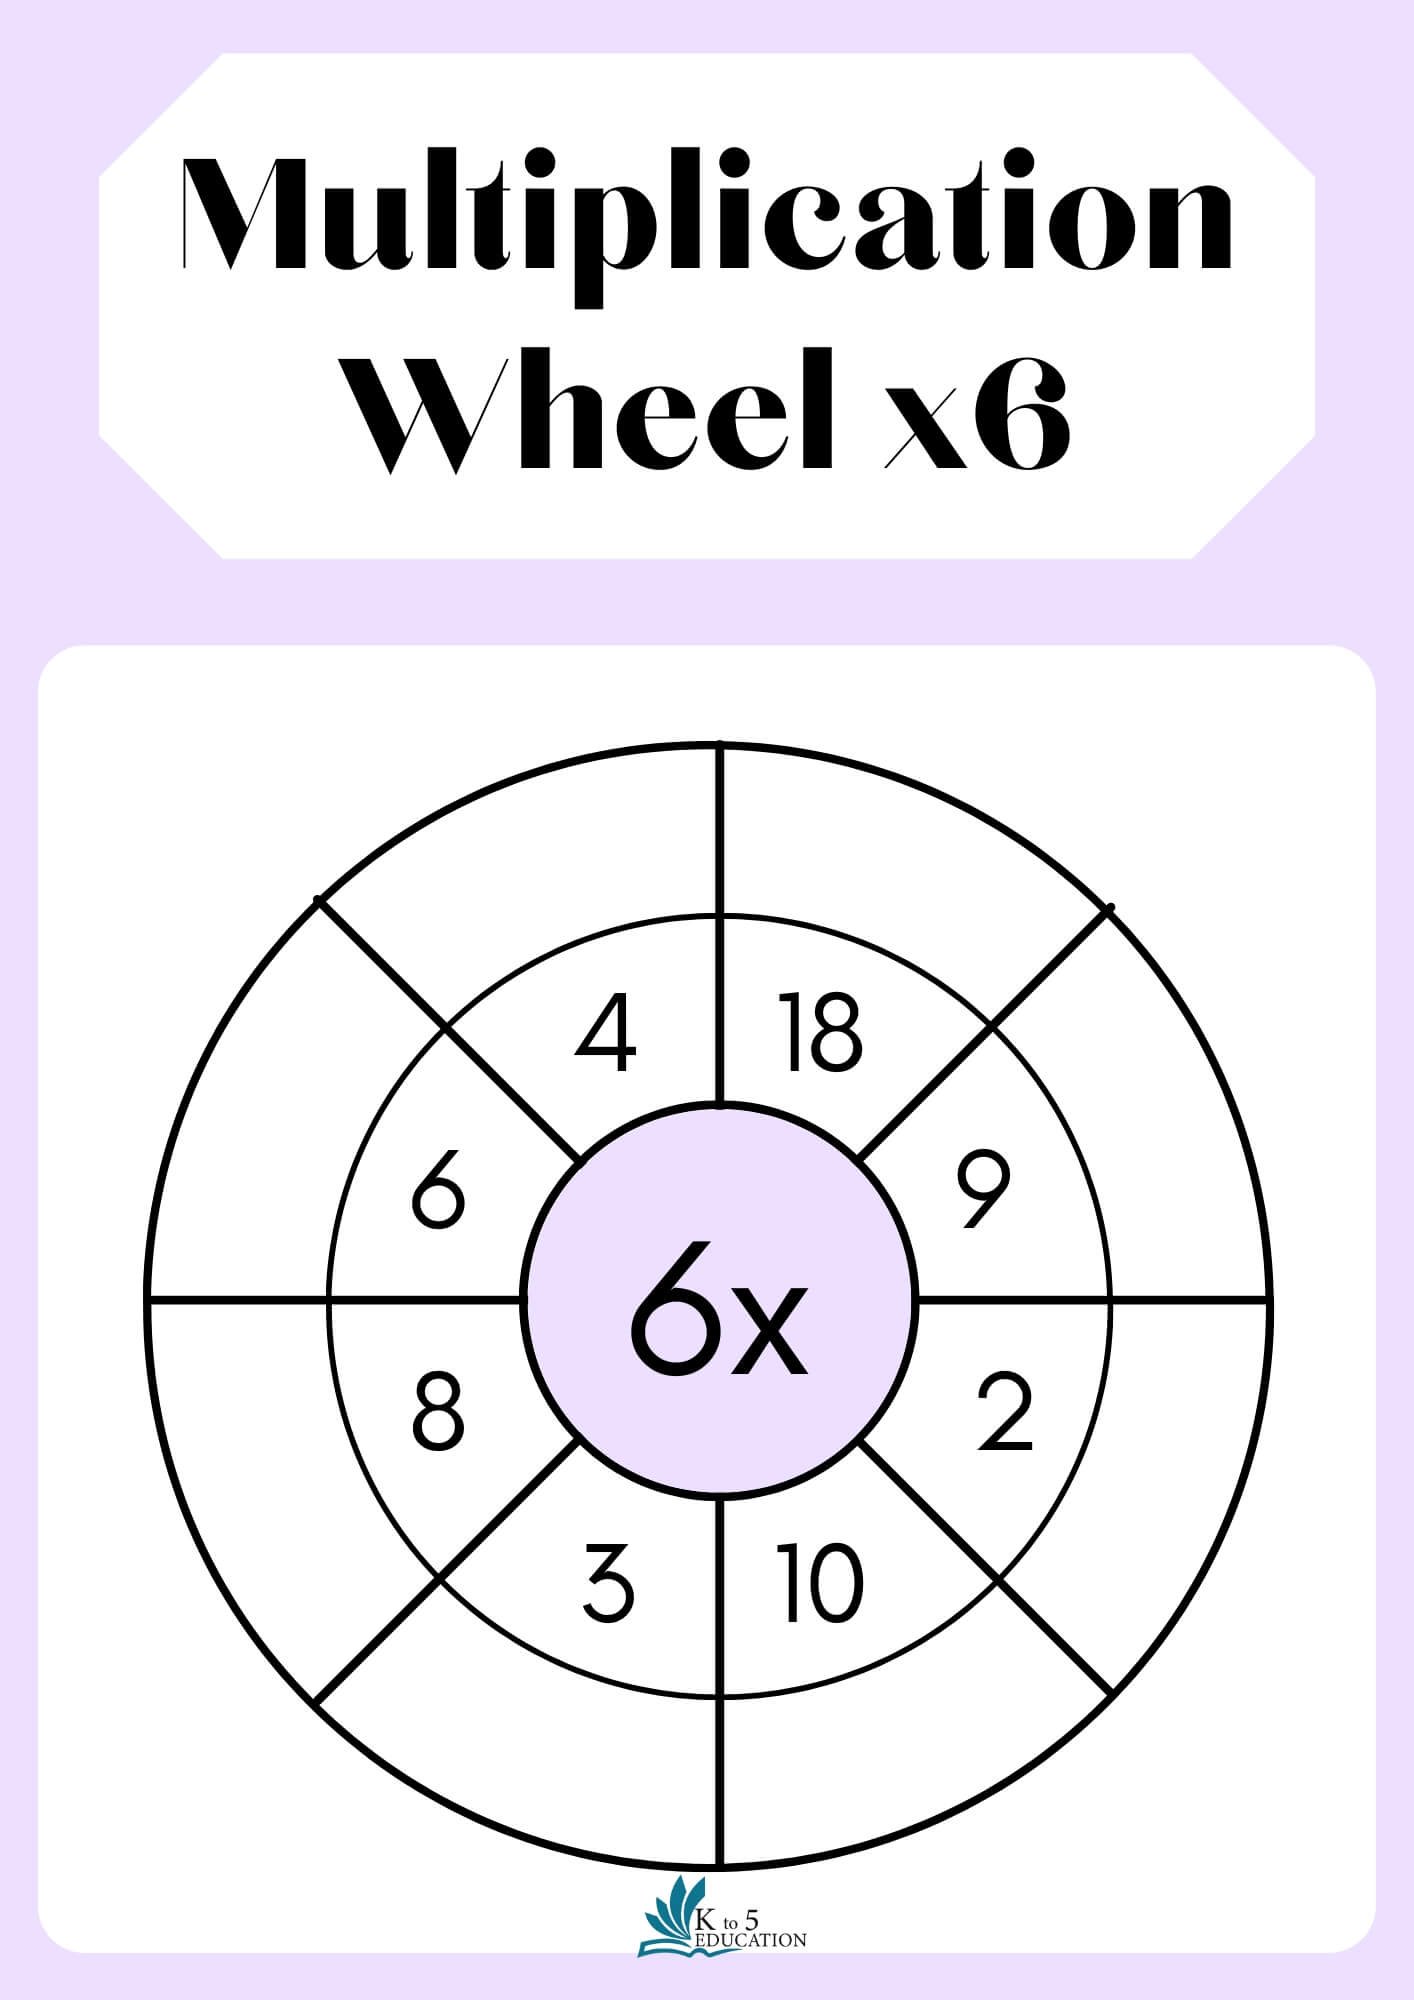 Multiplication Wheel x6 Worksheet